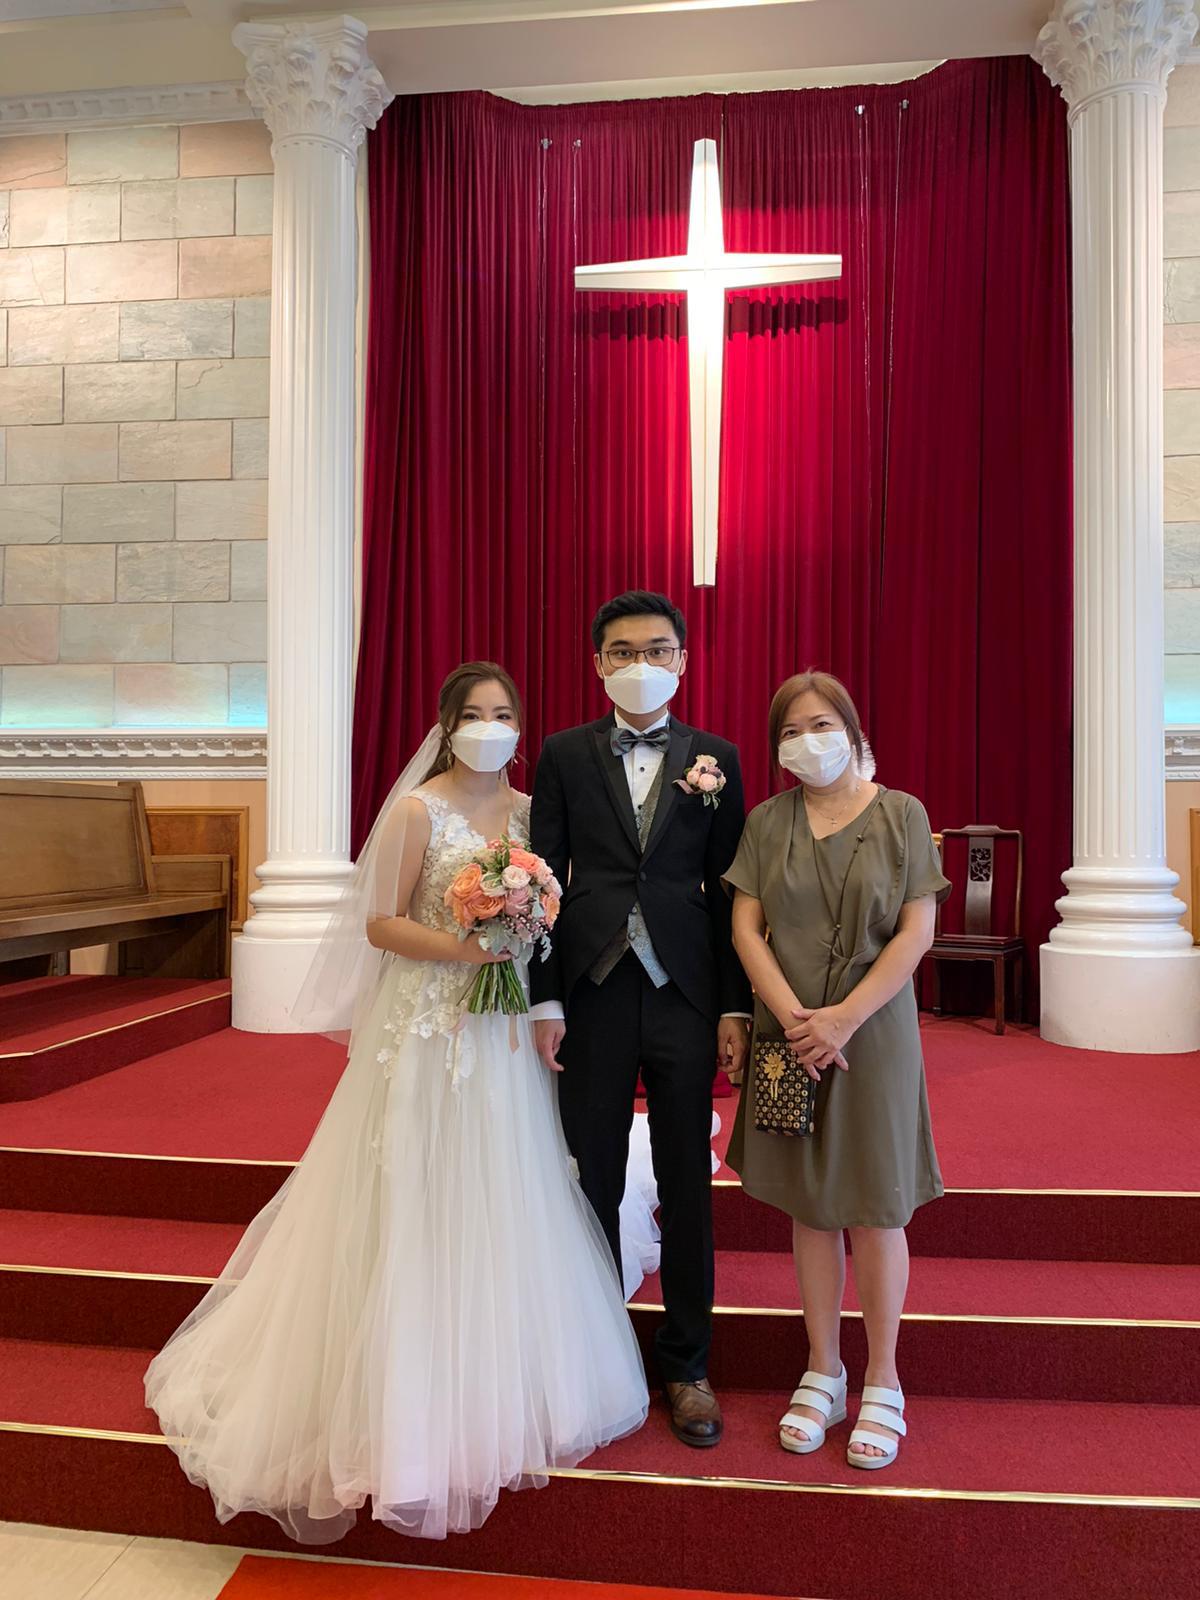 Queeny Ng之婚禮統籌師紀錄: 在疫情下，一對新人都很順利完成行禮 ❤